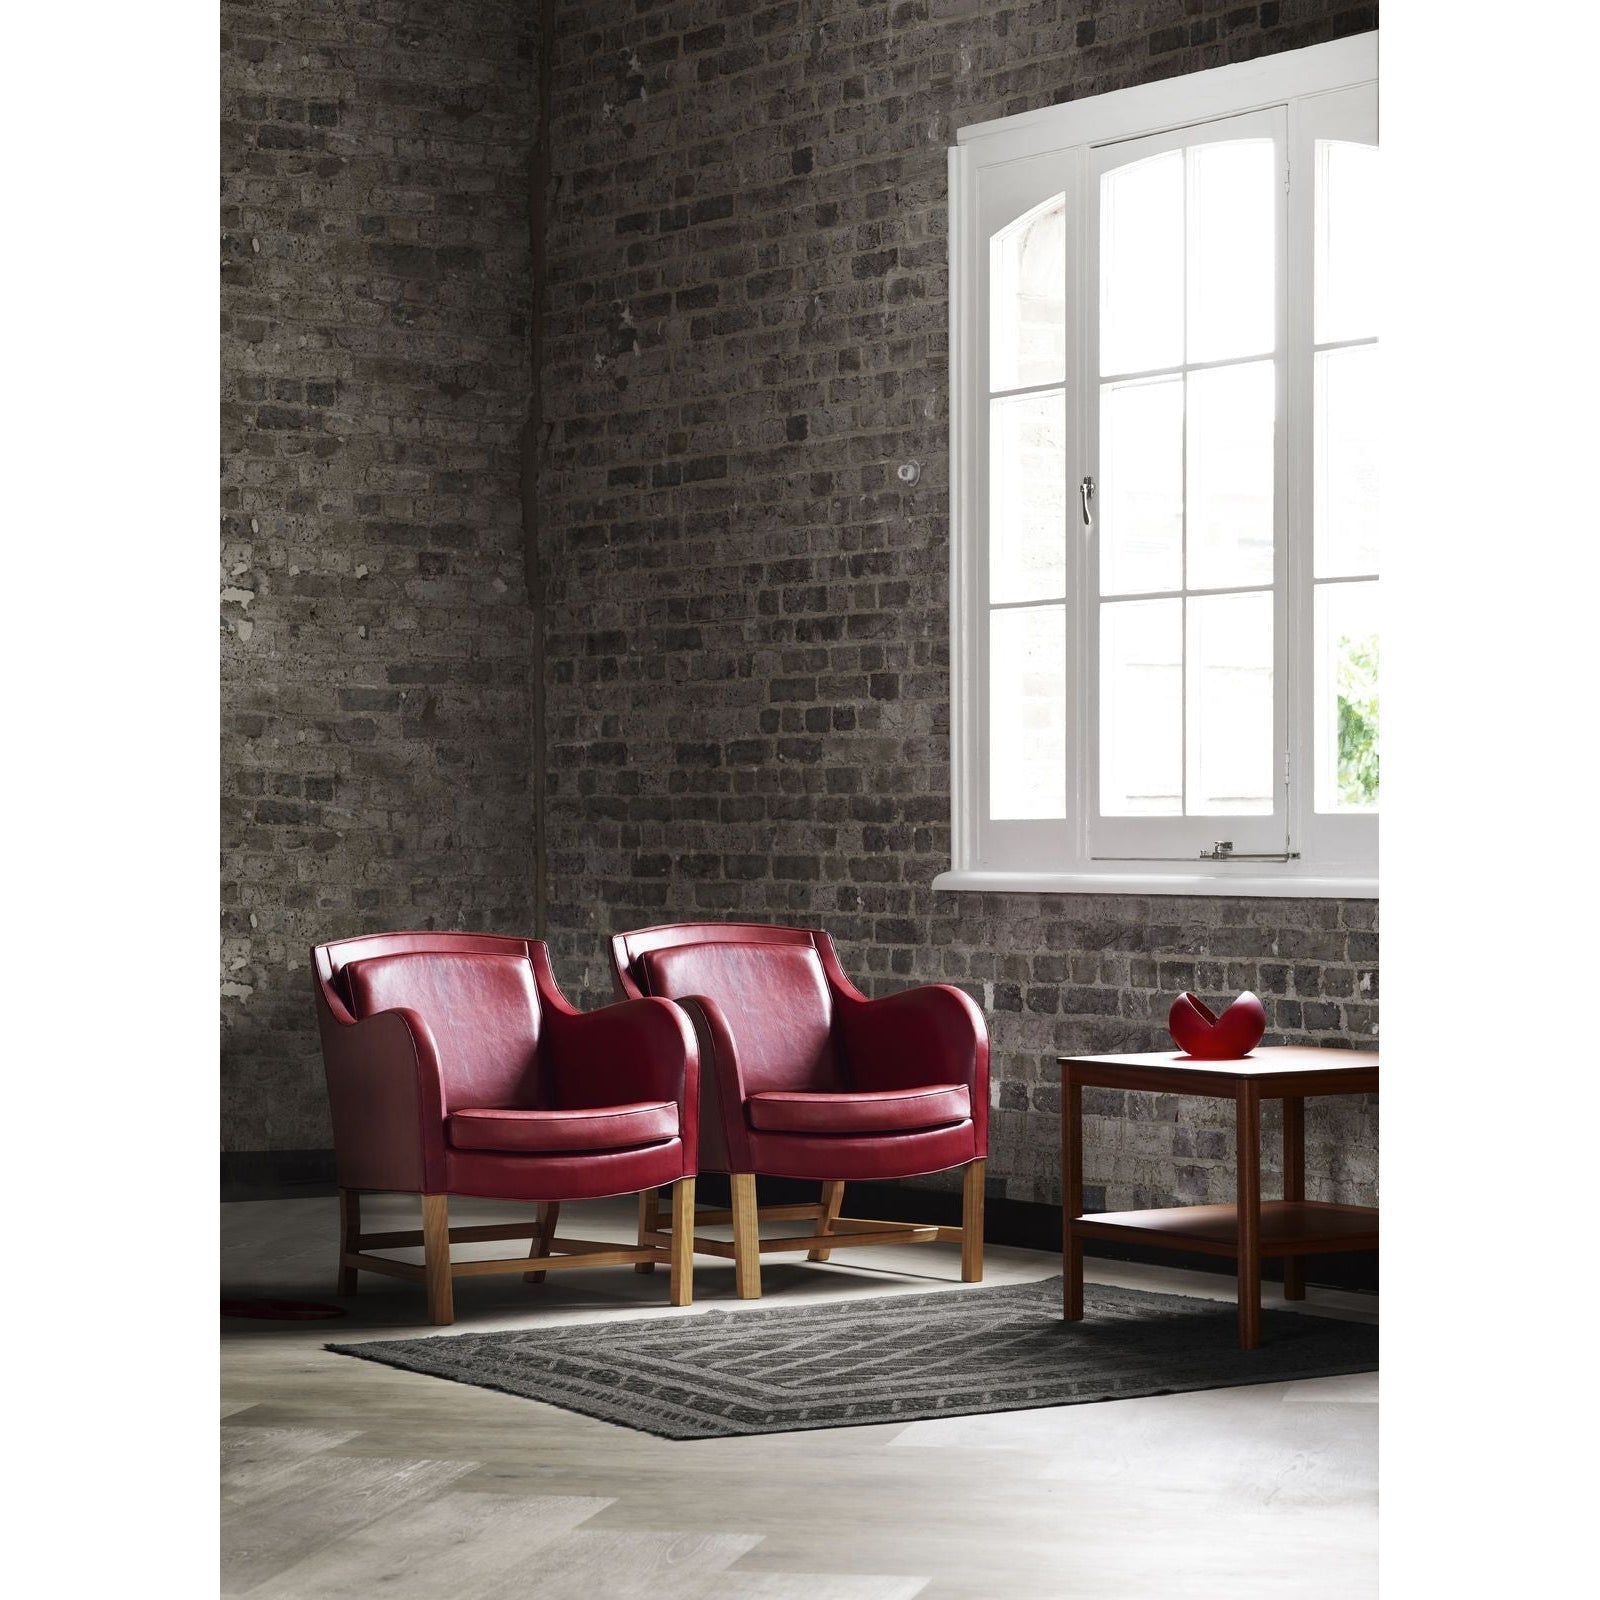 Carl Hansen KK43960 Mix Lounge Chair, oljat ek/svart läder